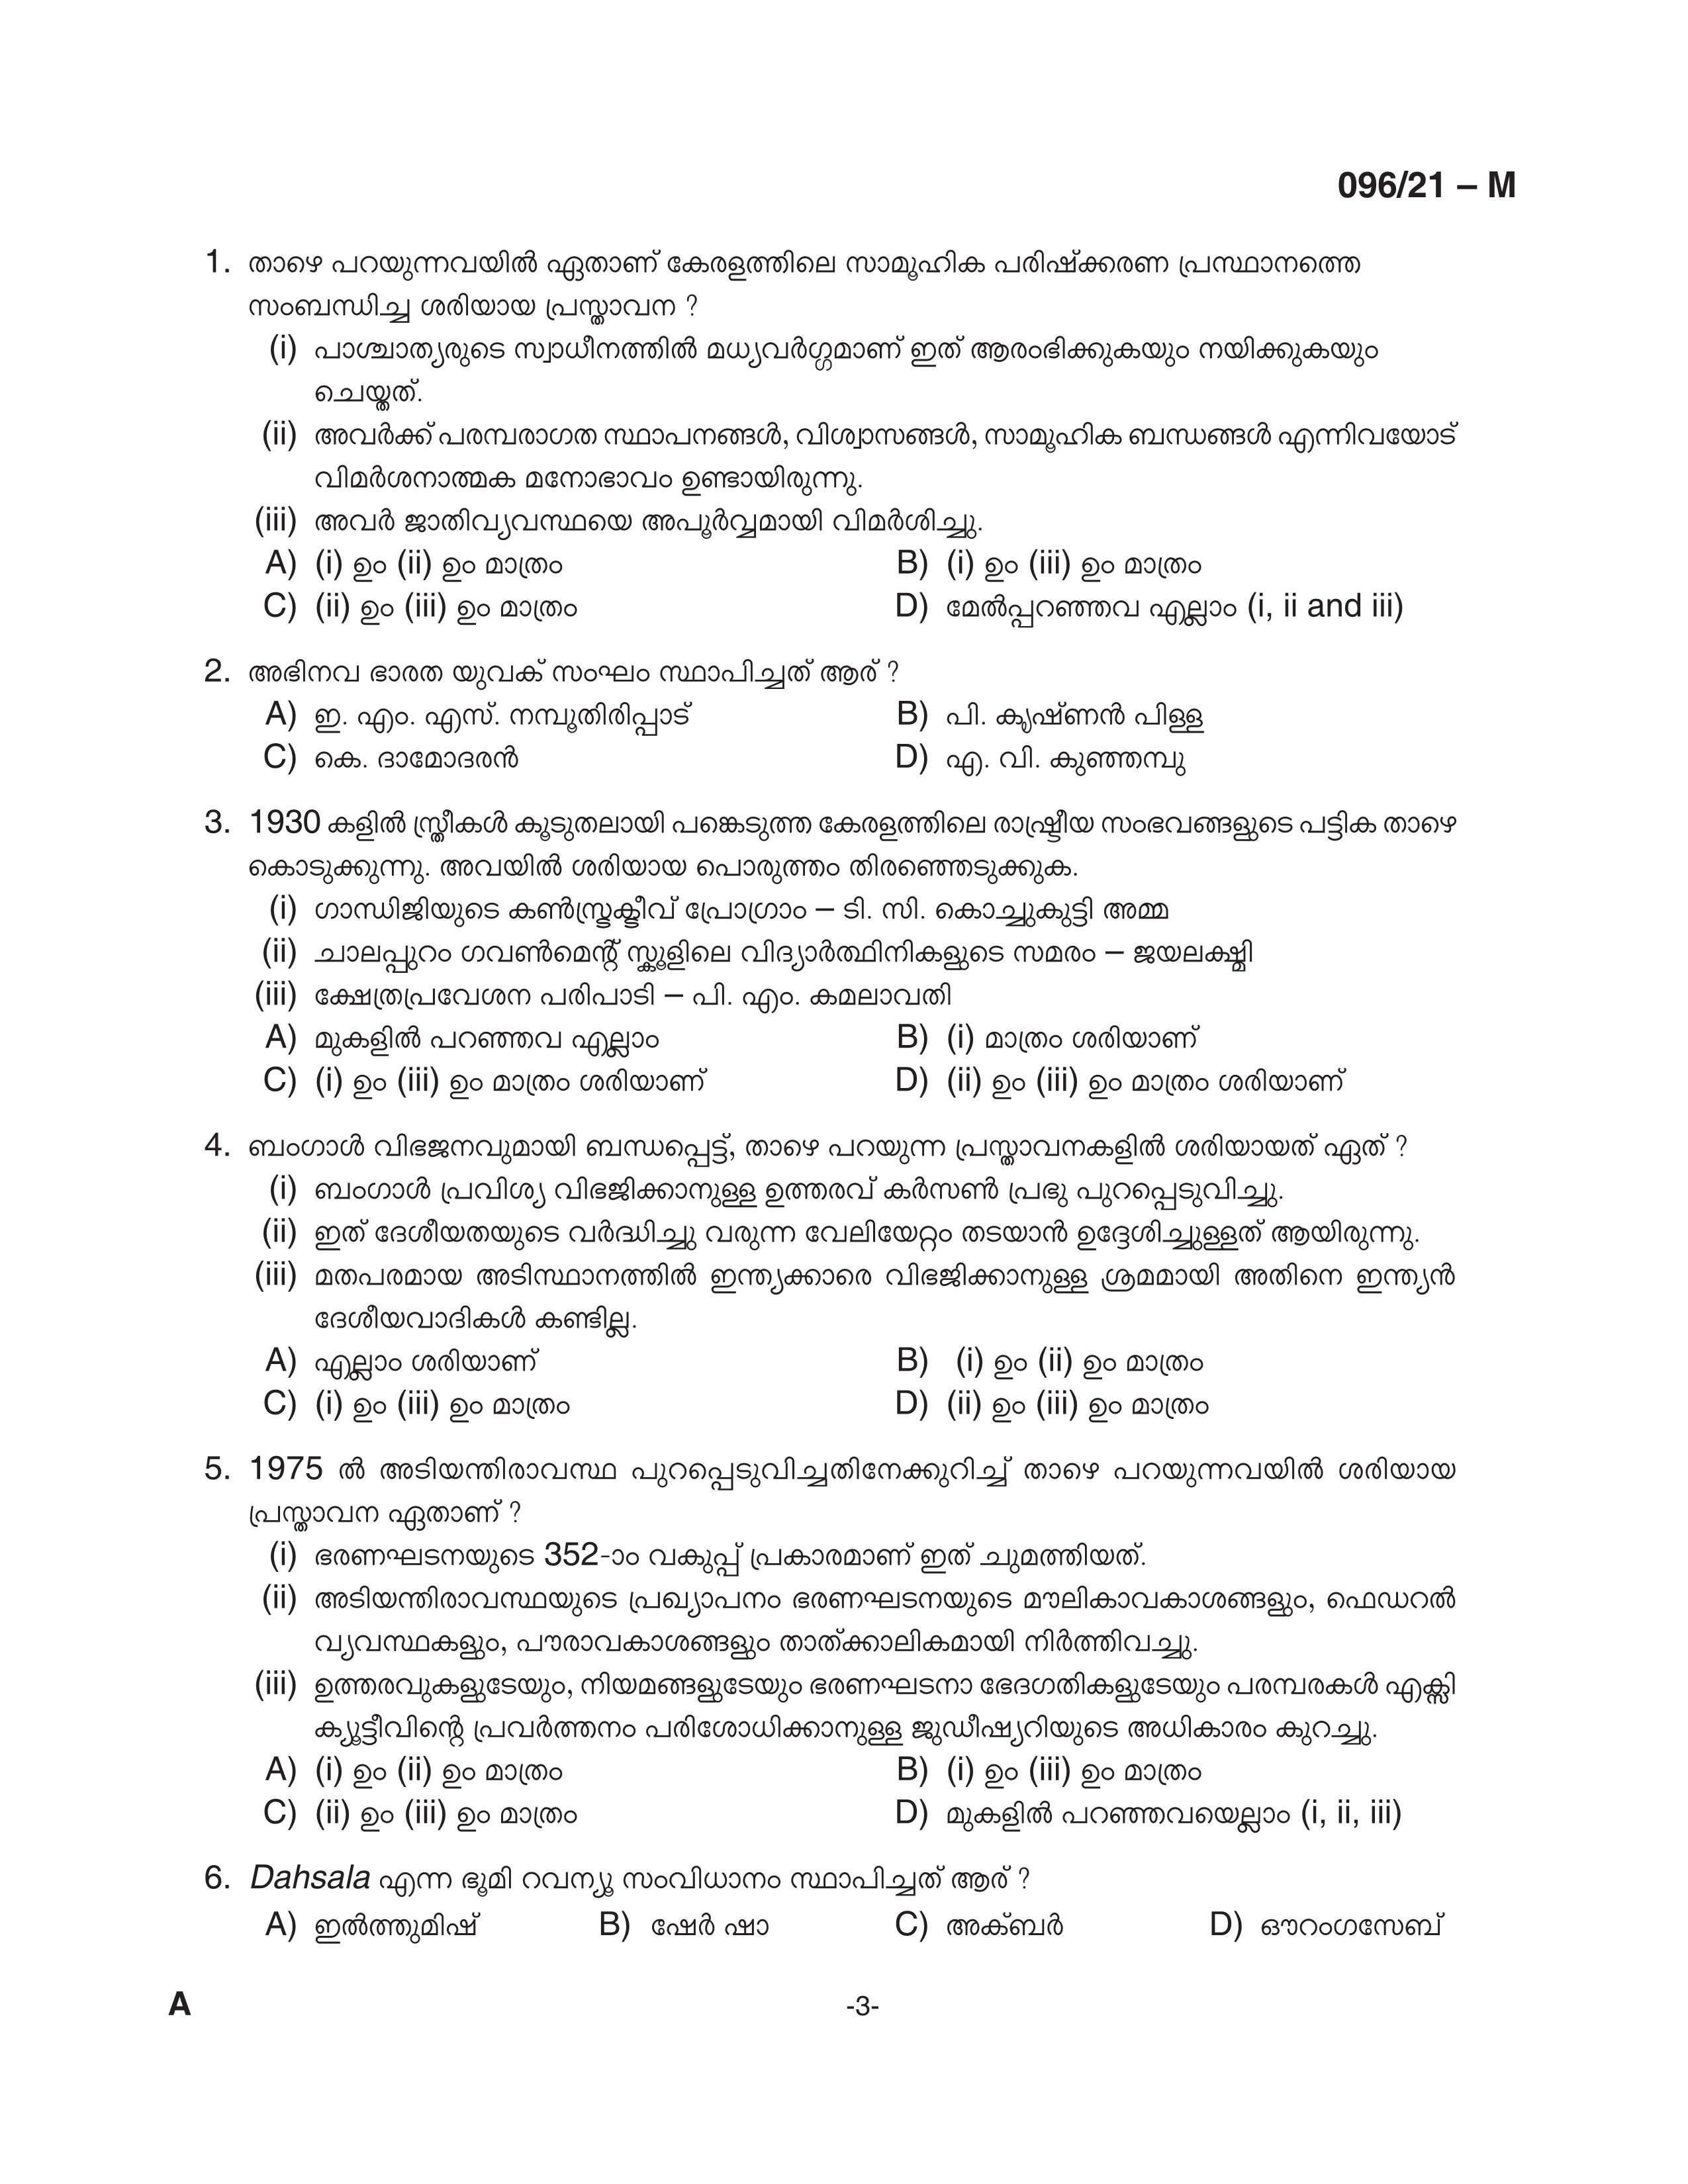 KPSC Degree Level Preliminary Exam Stage II Malayalam 2021 Code 09621 M 3